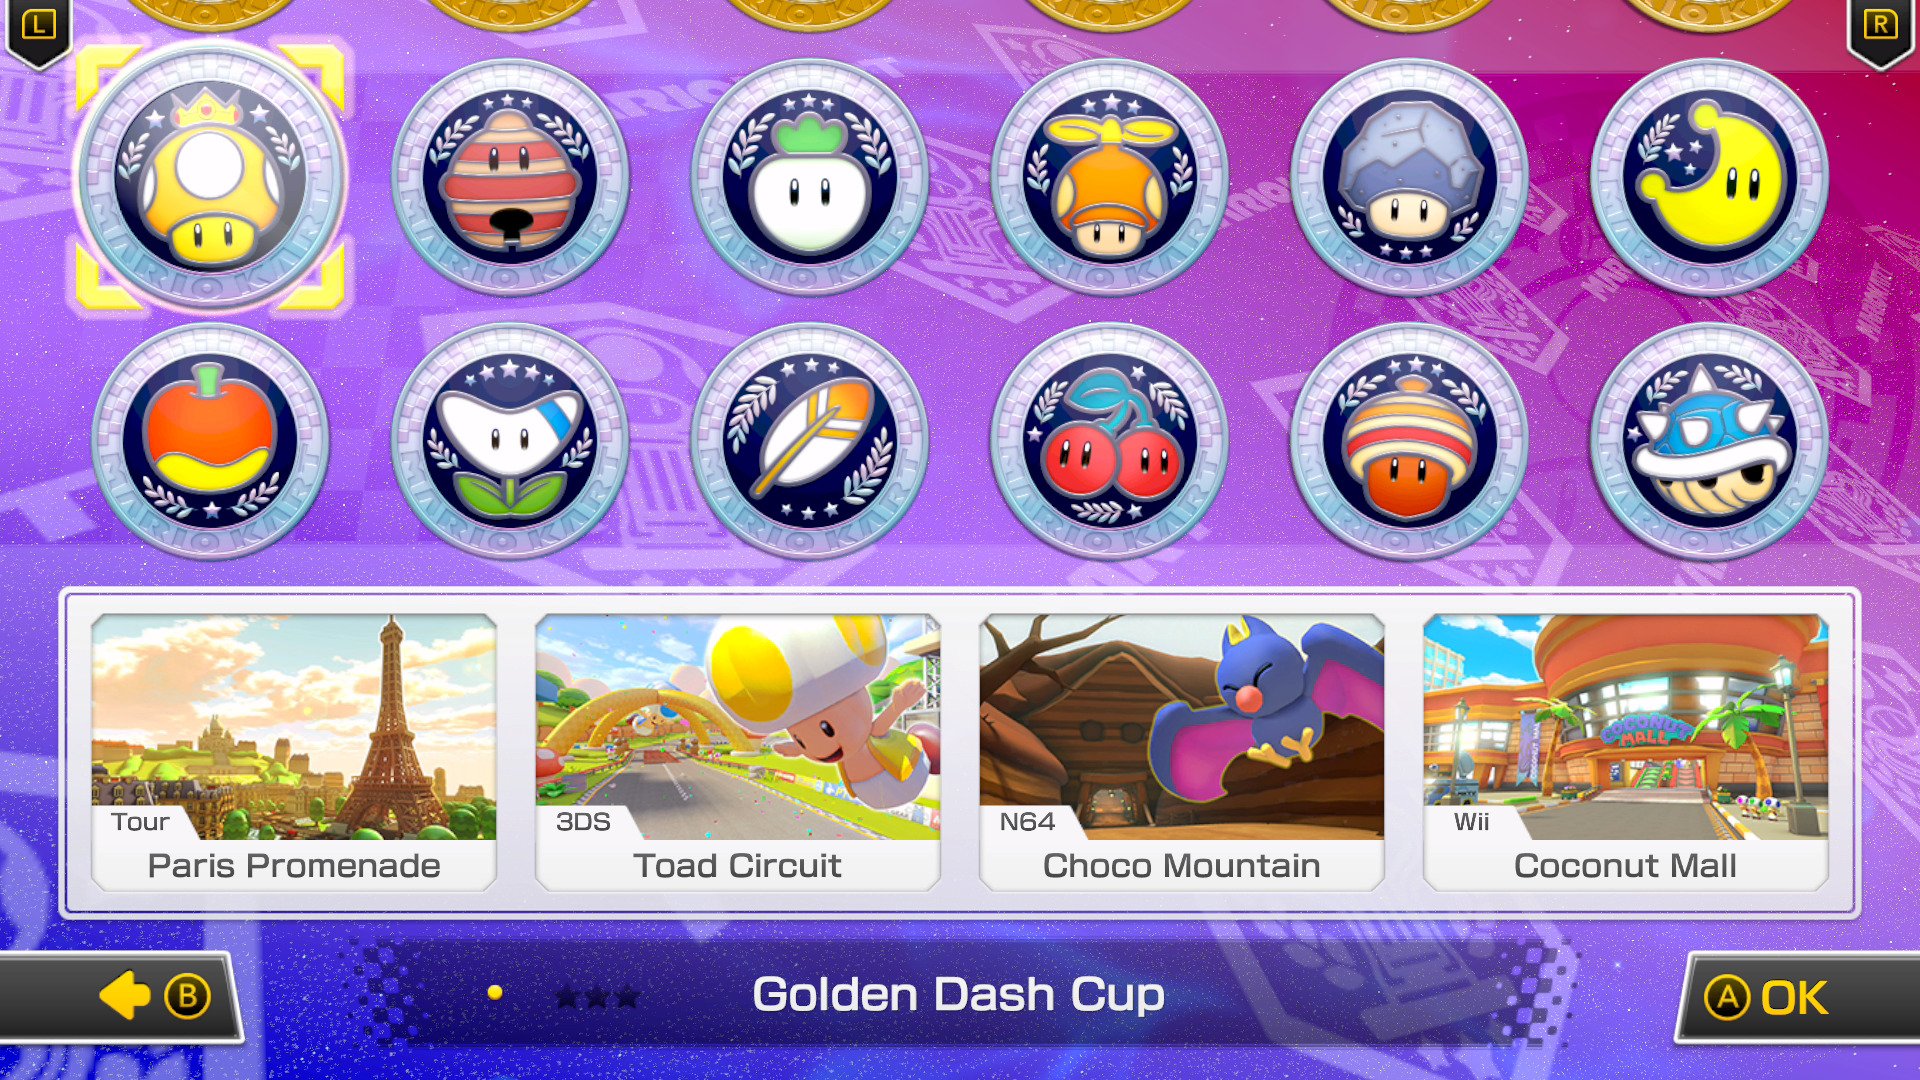 Mario Kart 8 Deluxe’s new update reveals all 12 DLC cup names VGC